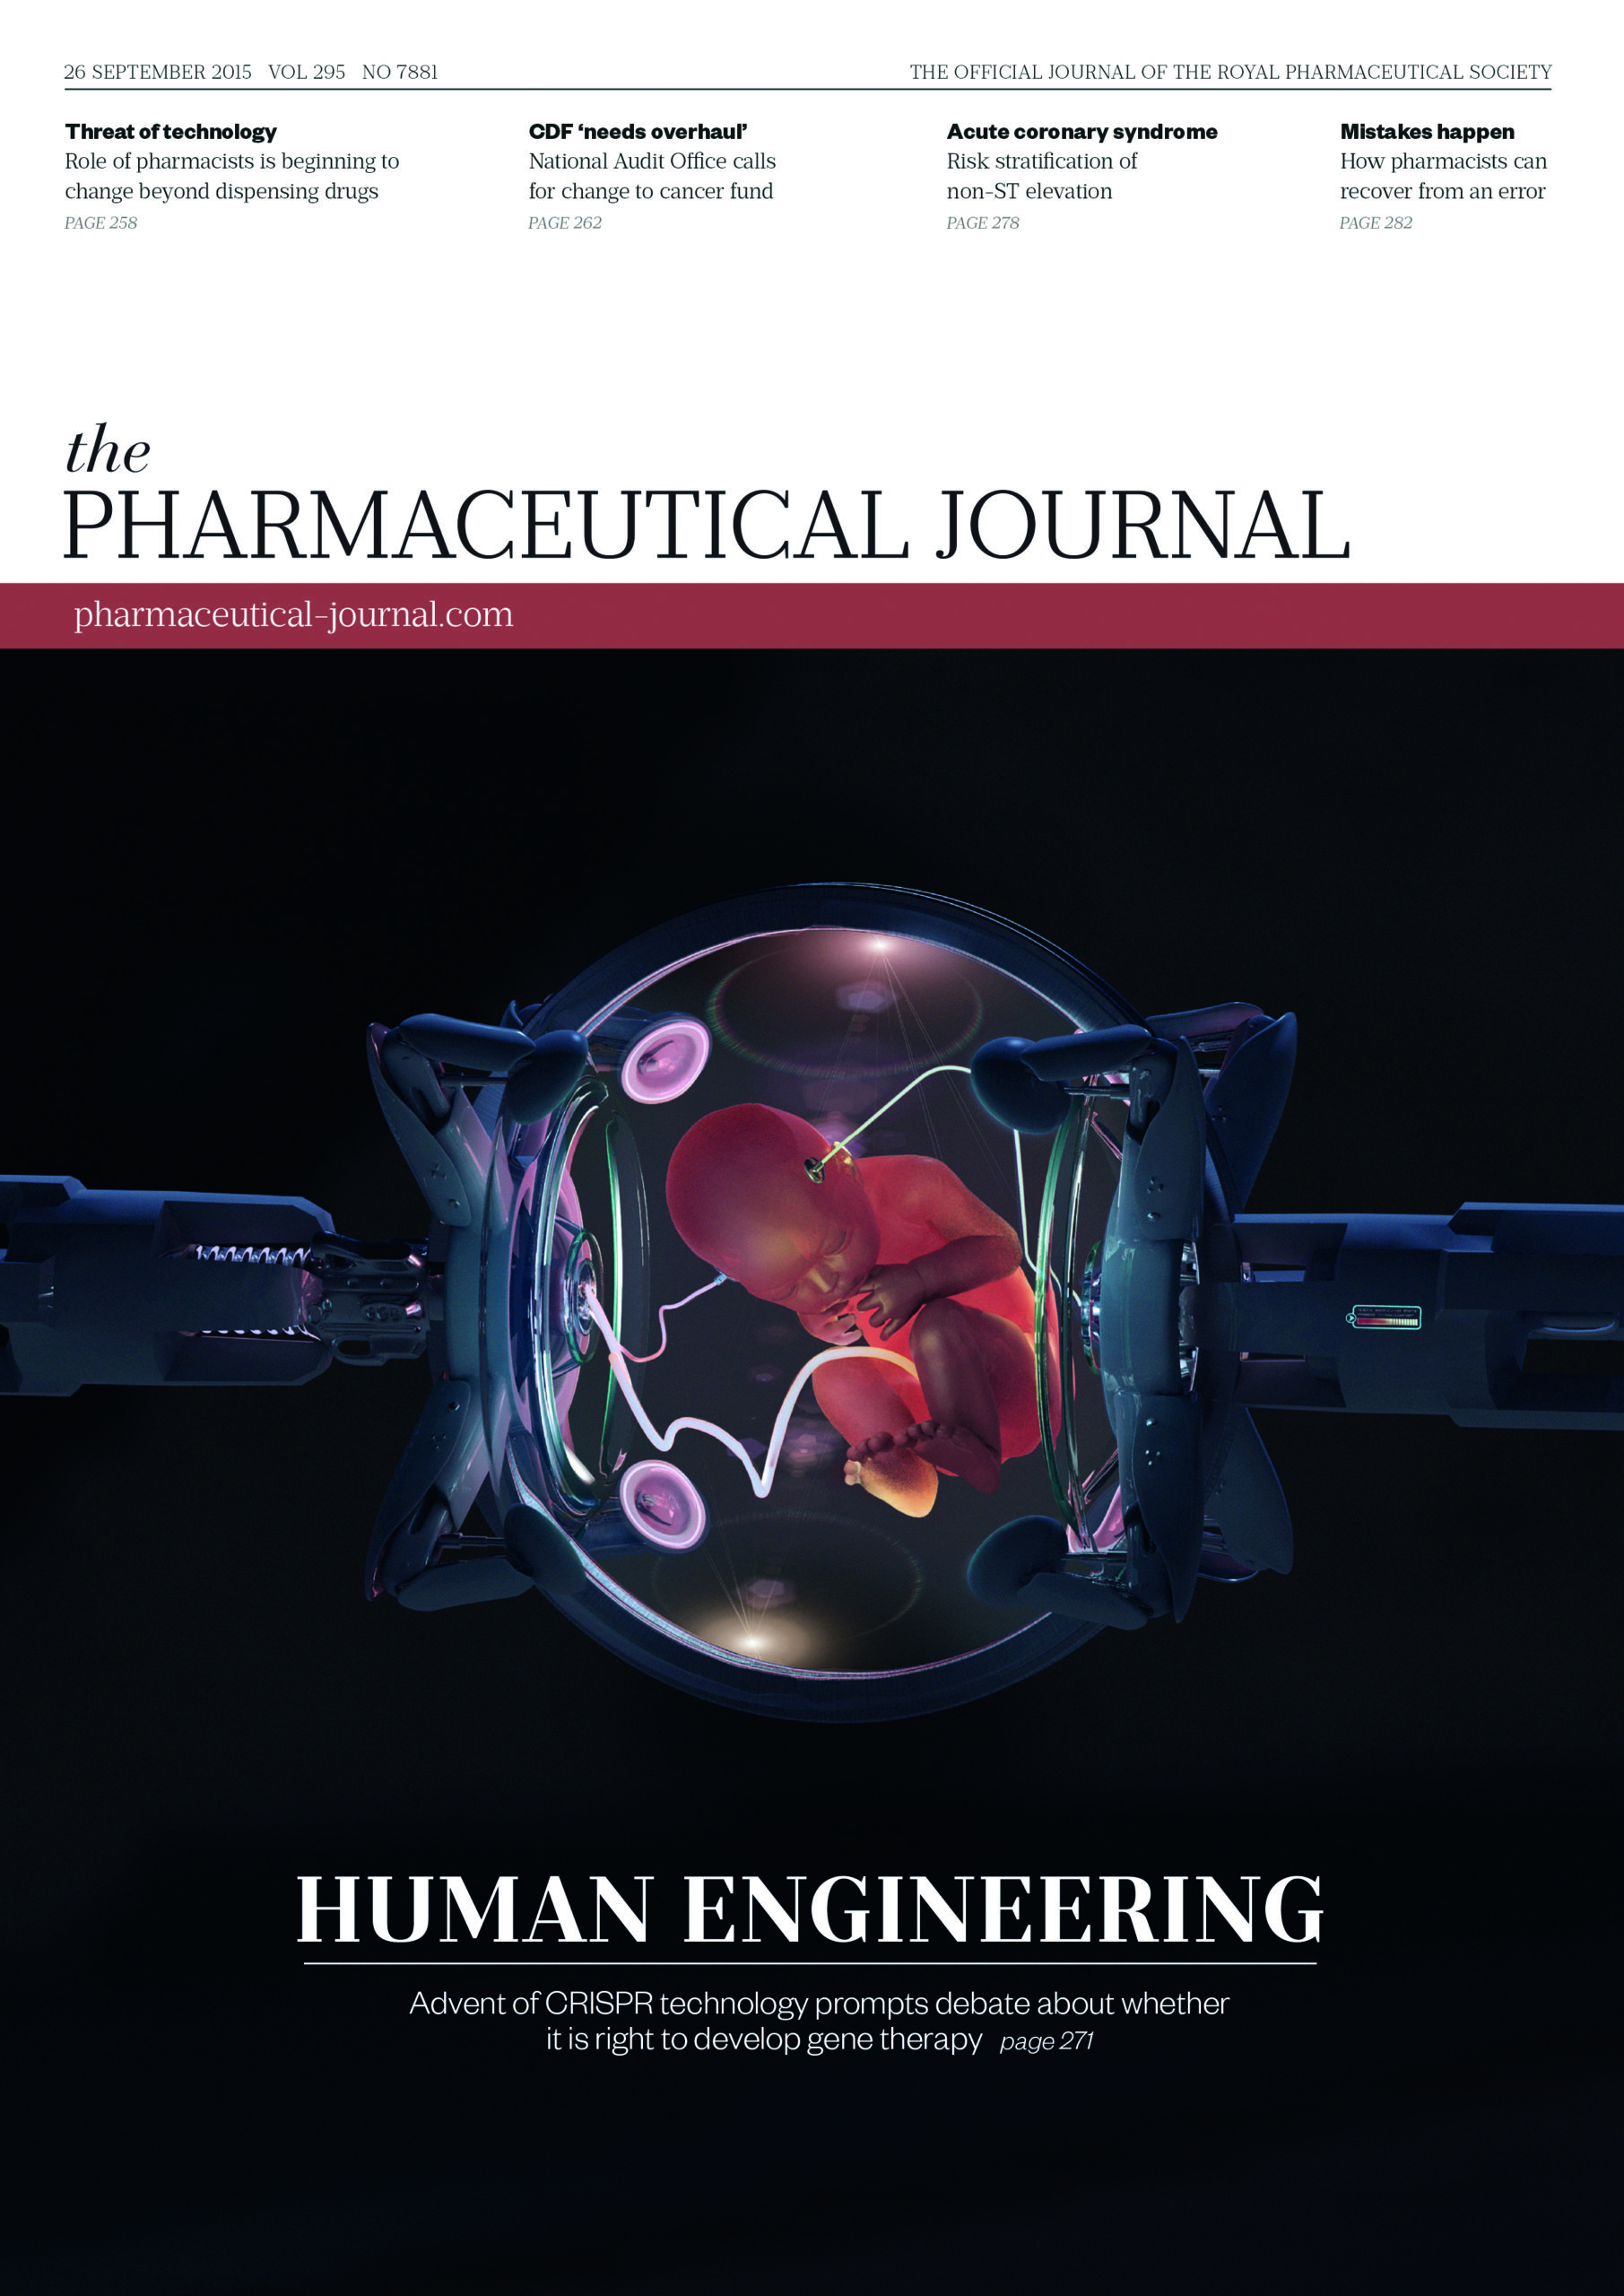 Publication issue cover for PJ, 26 September 2015, Vol 295, No 7881